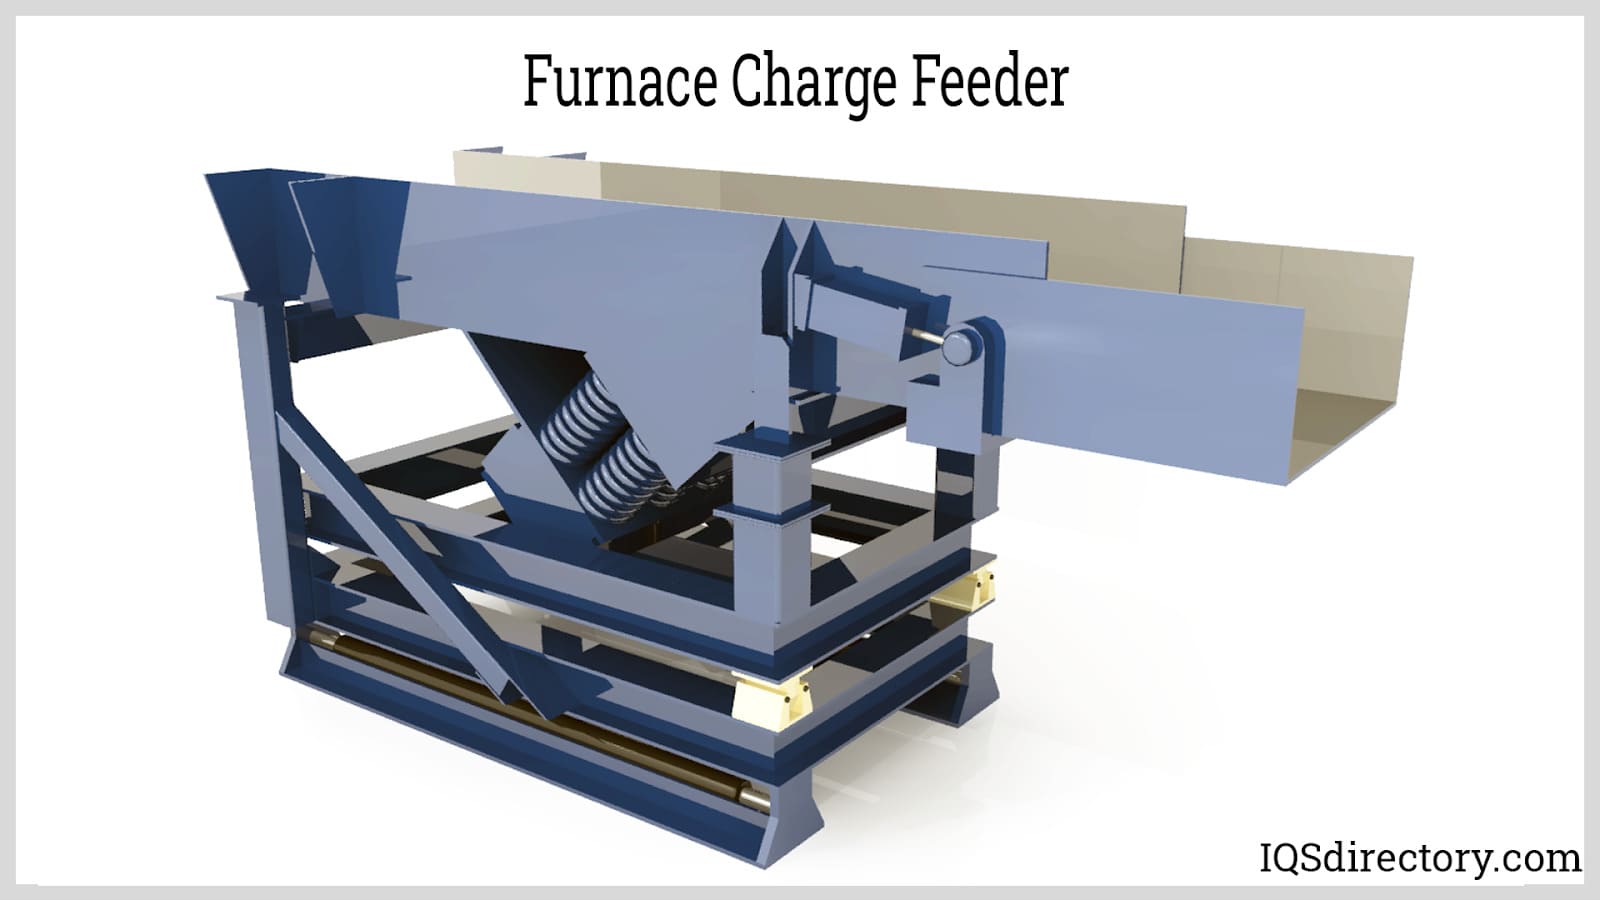 Furnace Charge Feeder